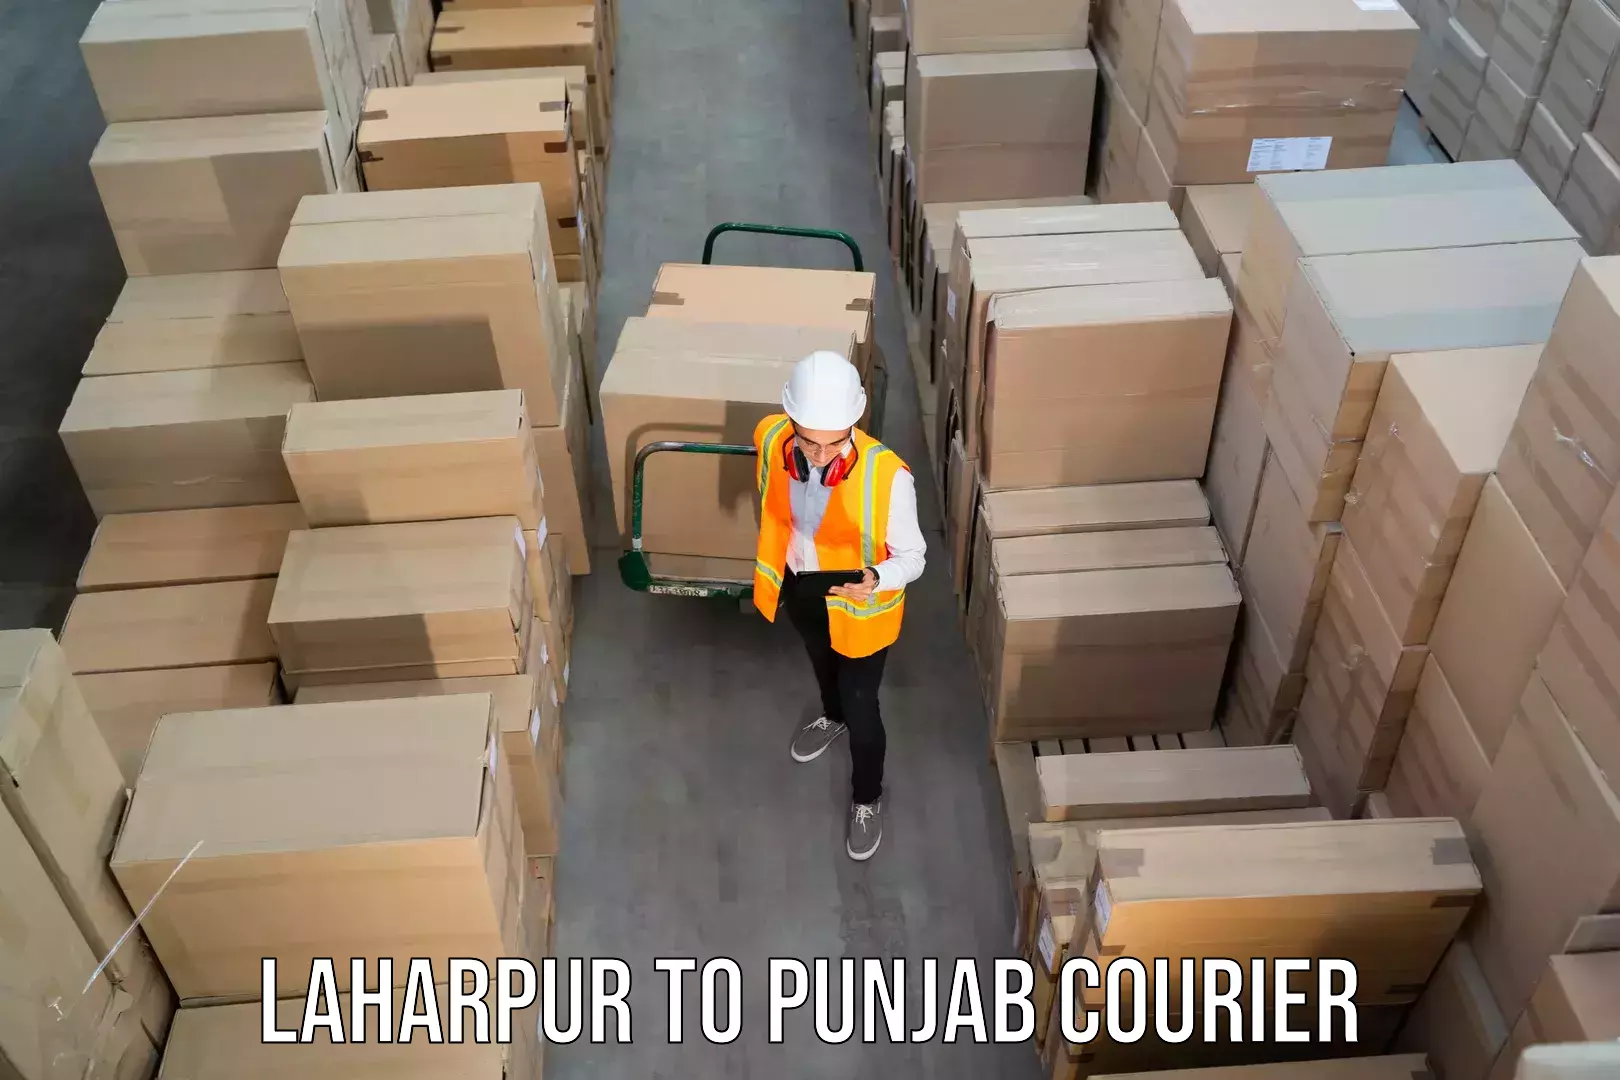 Quick dispatch service Laharpur to Sultanpur Lodhi